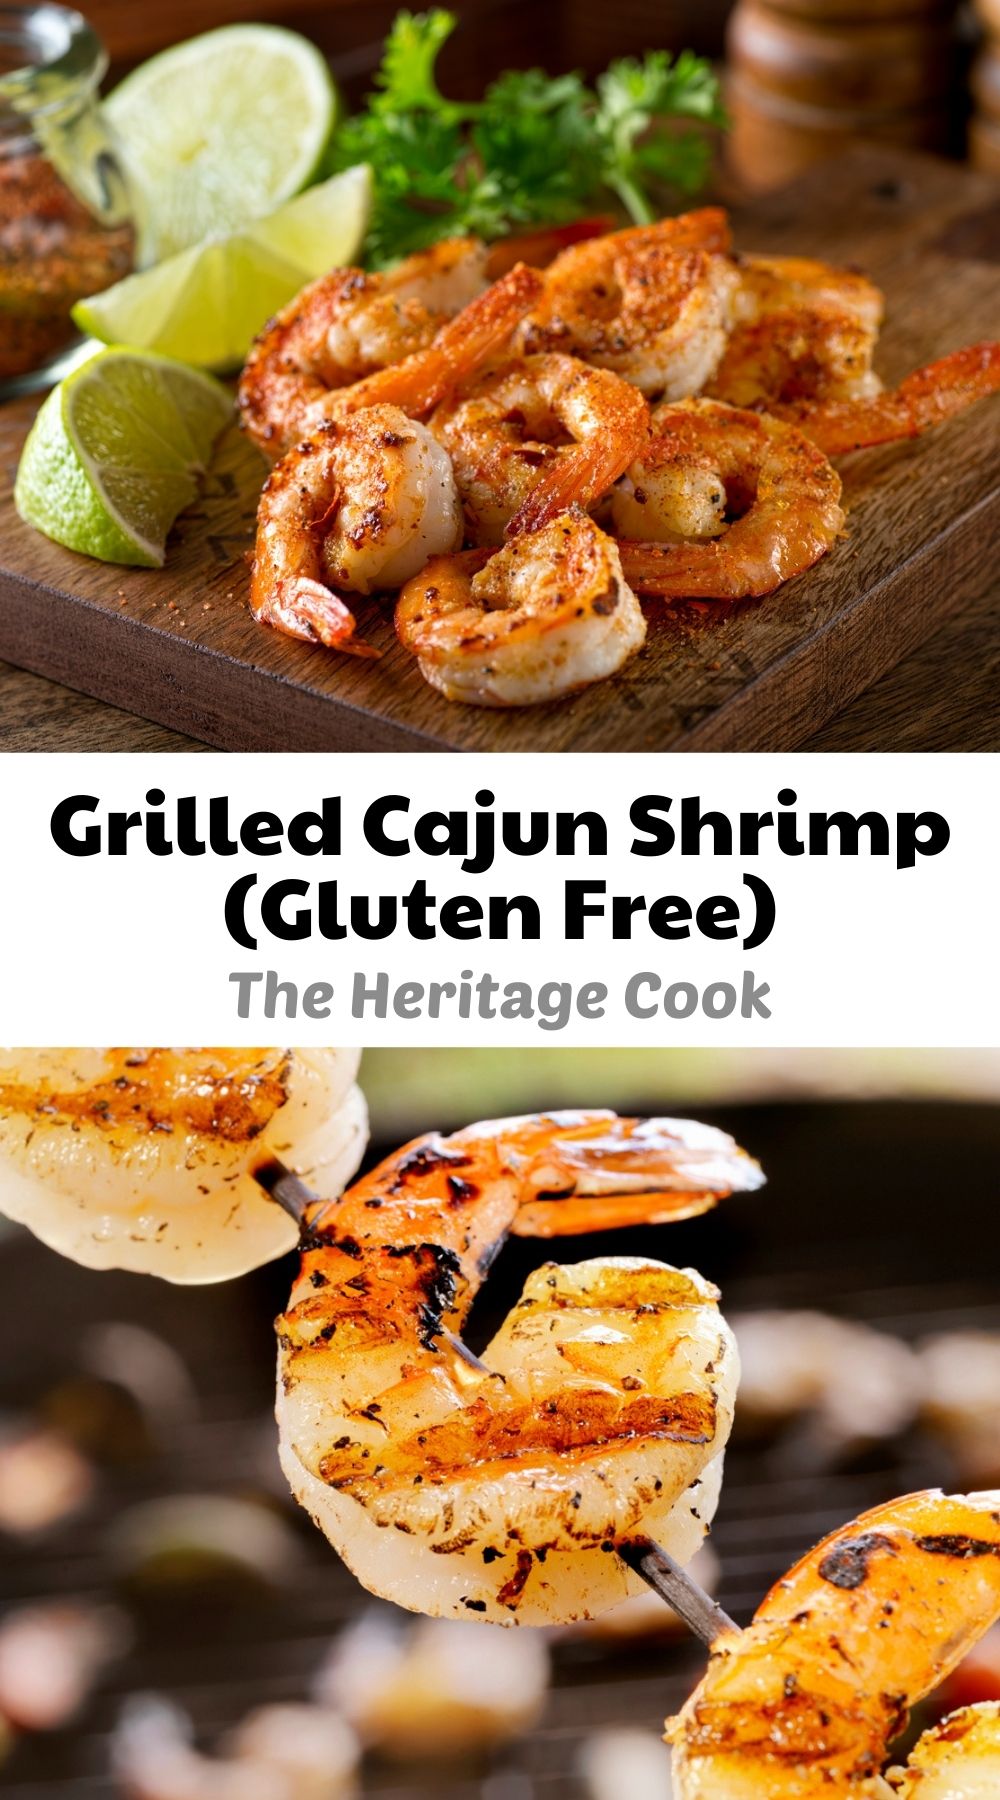 Grilled Cajun Shrimp Skewers 2021 Jane Bonacci, The Heritage Cook